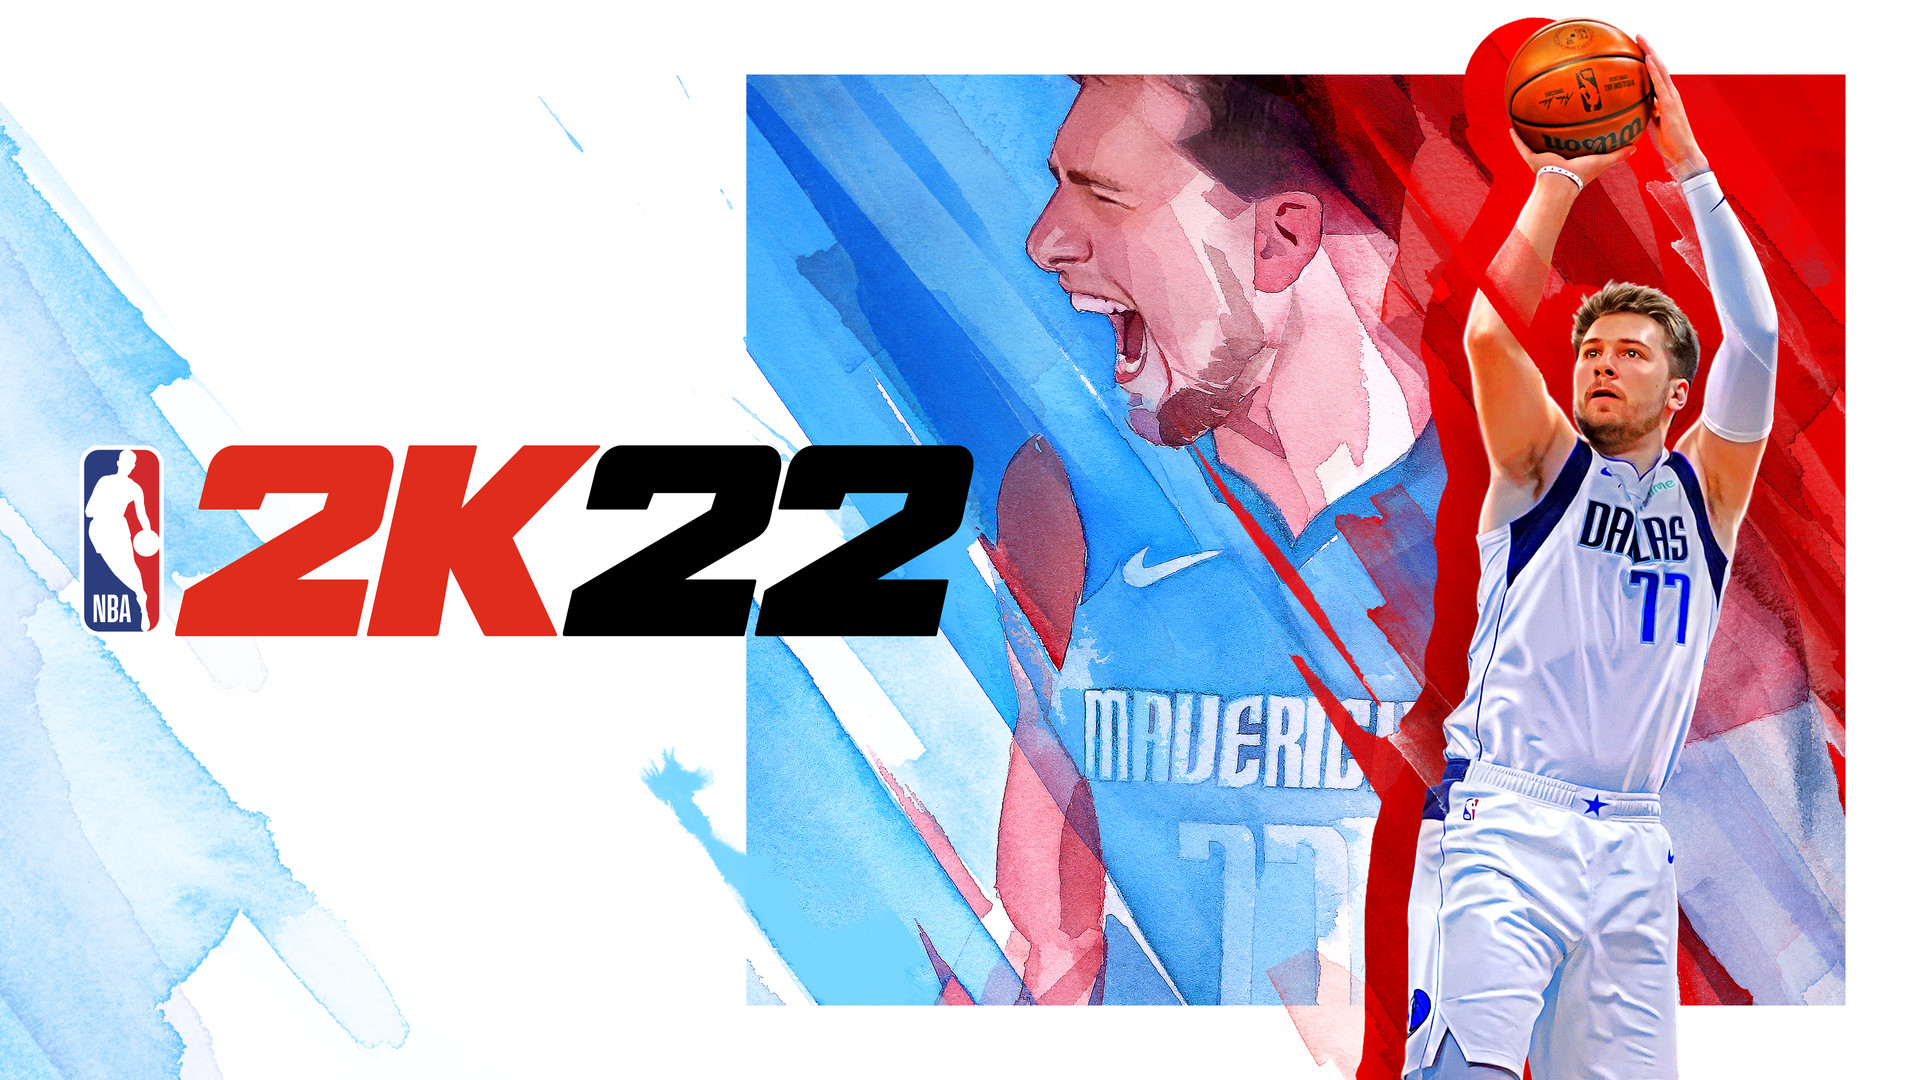 《NBA 2K22》正式上架Steam商城 預售價199元